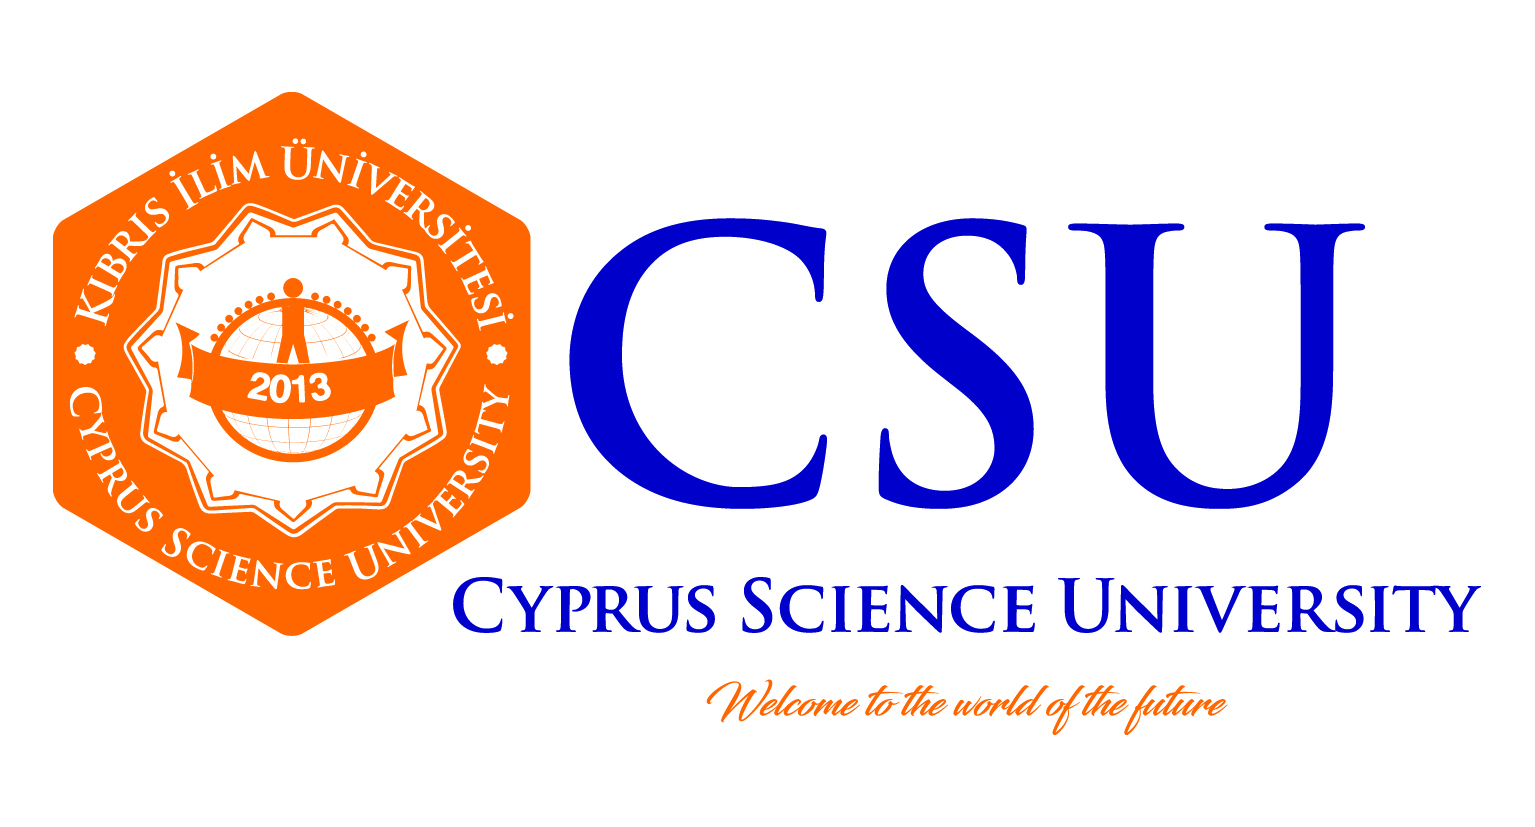 Cyprus science university